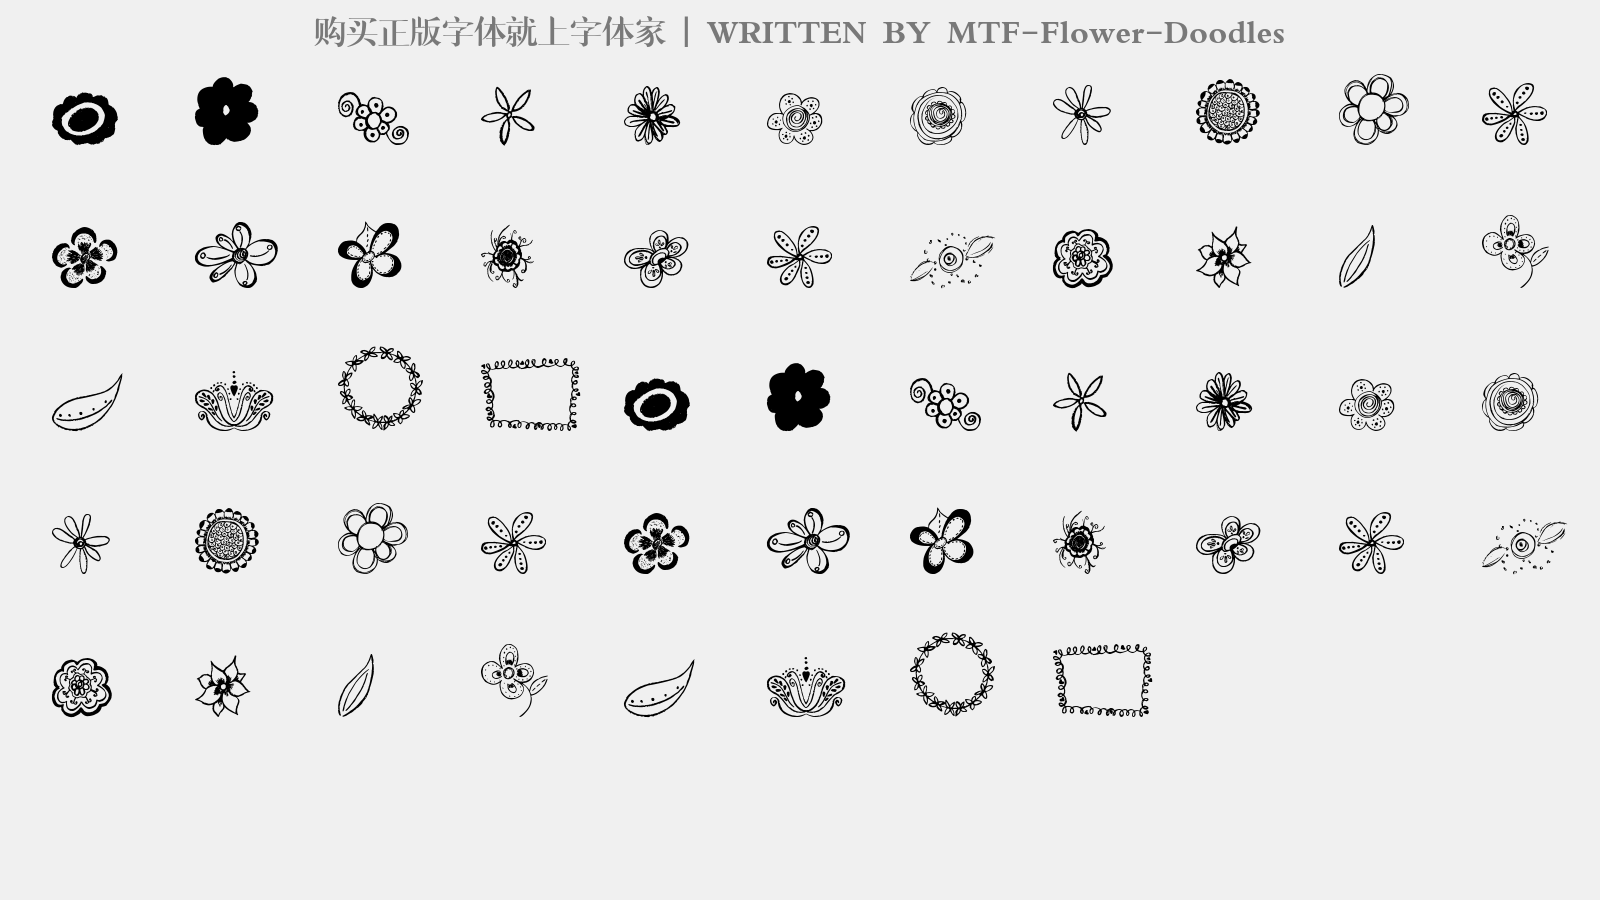 MTF-Flower-Doodles - 大写字母/小写字母/数字